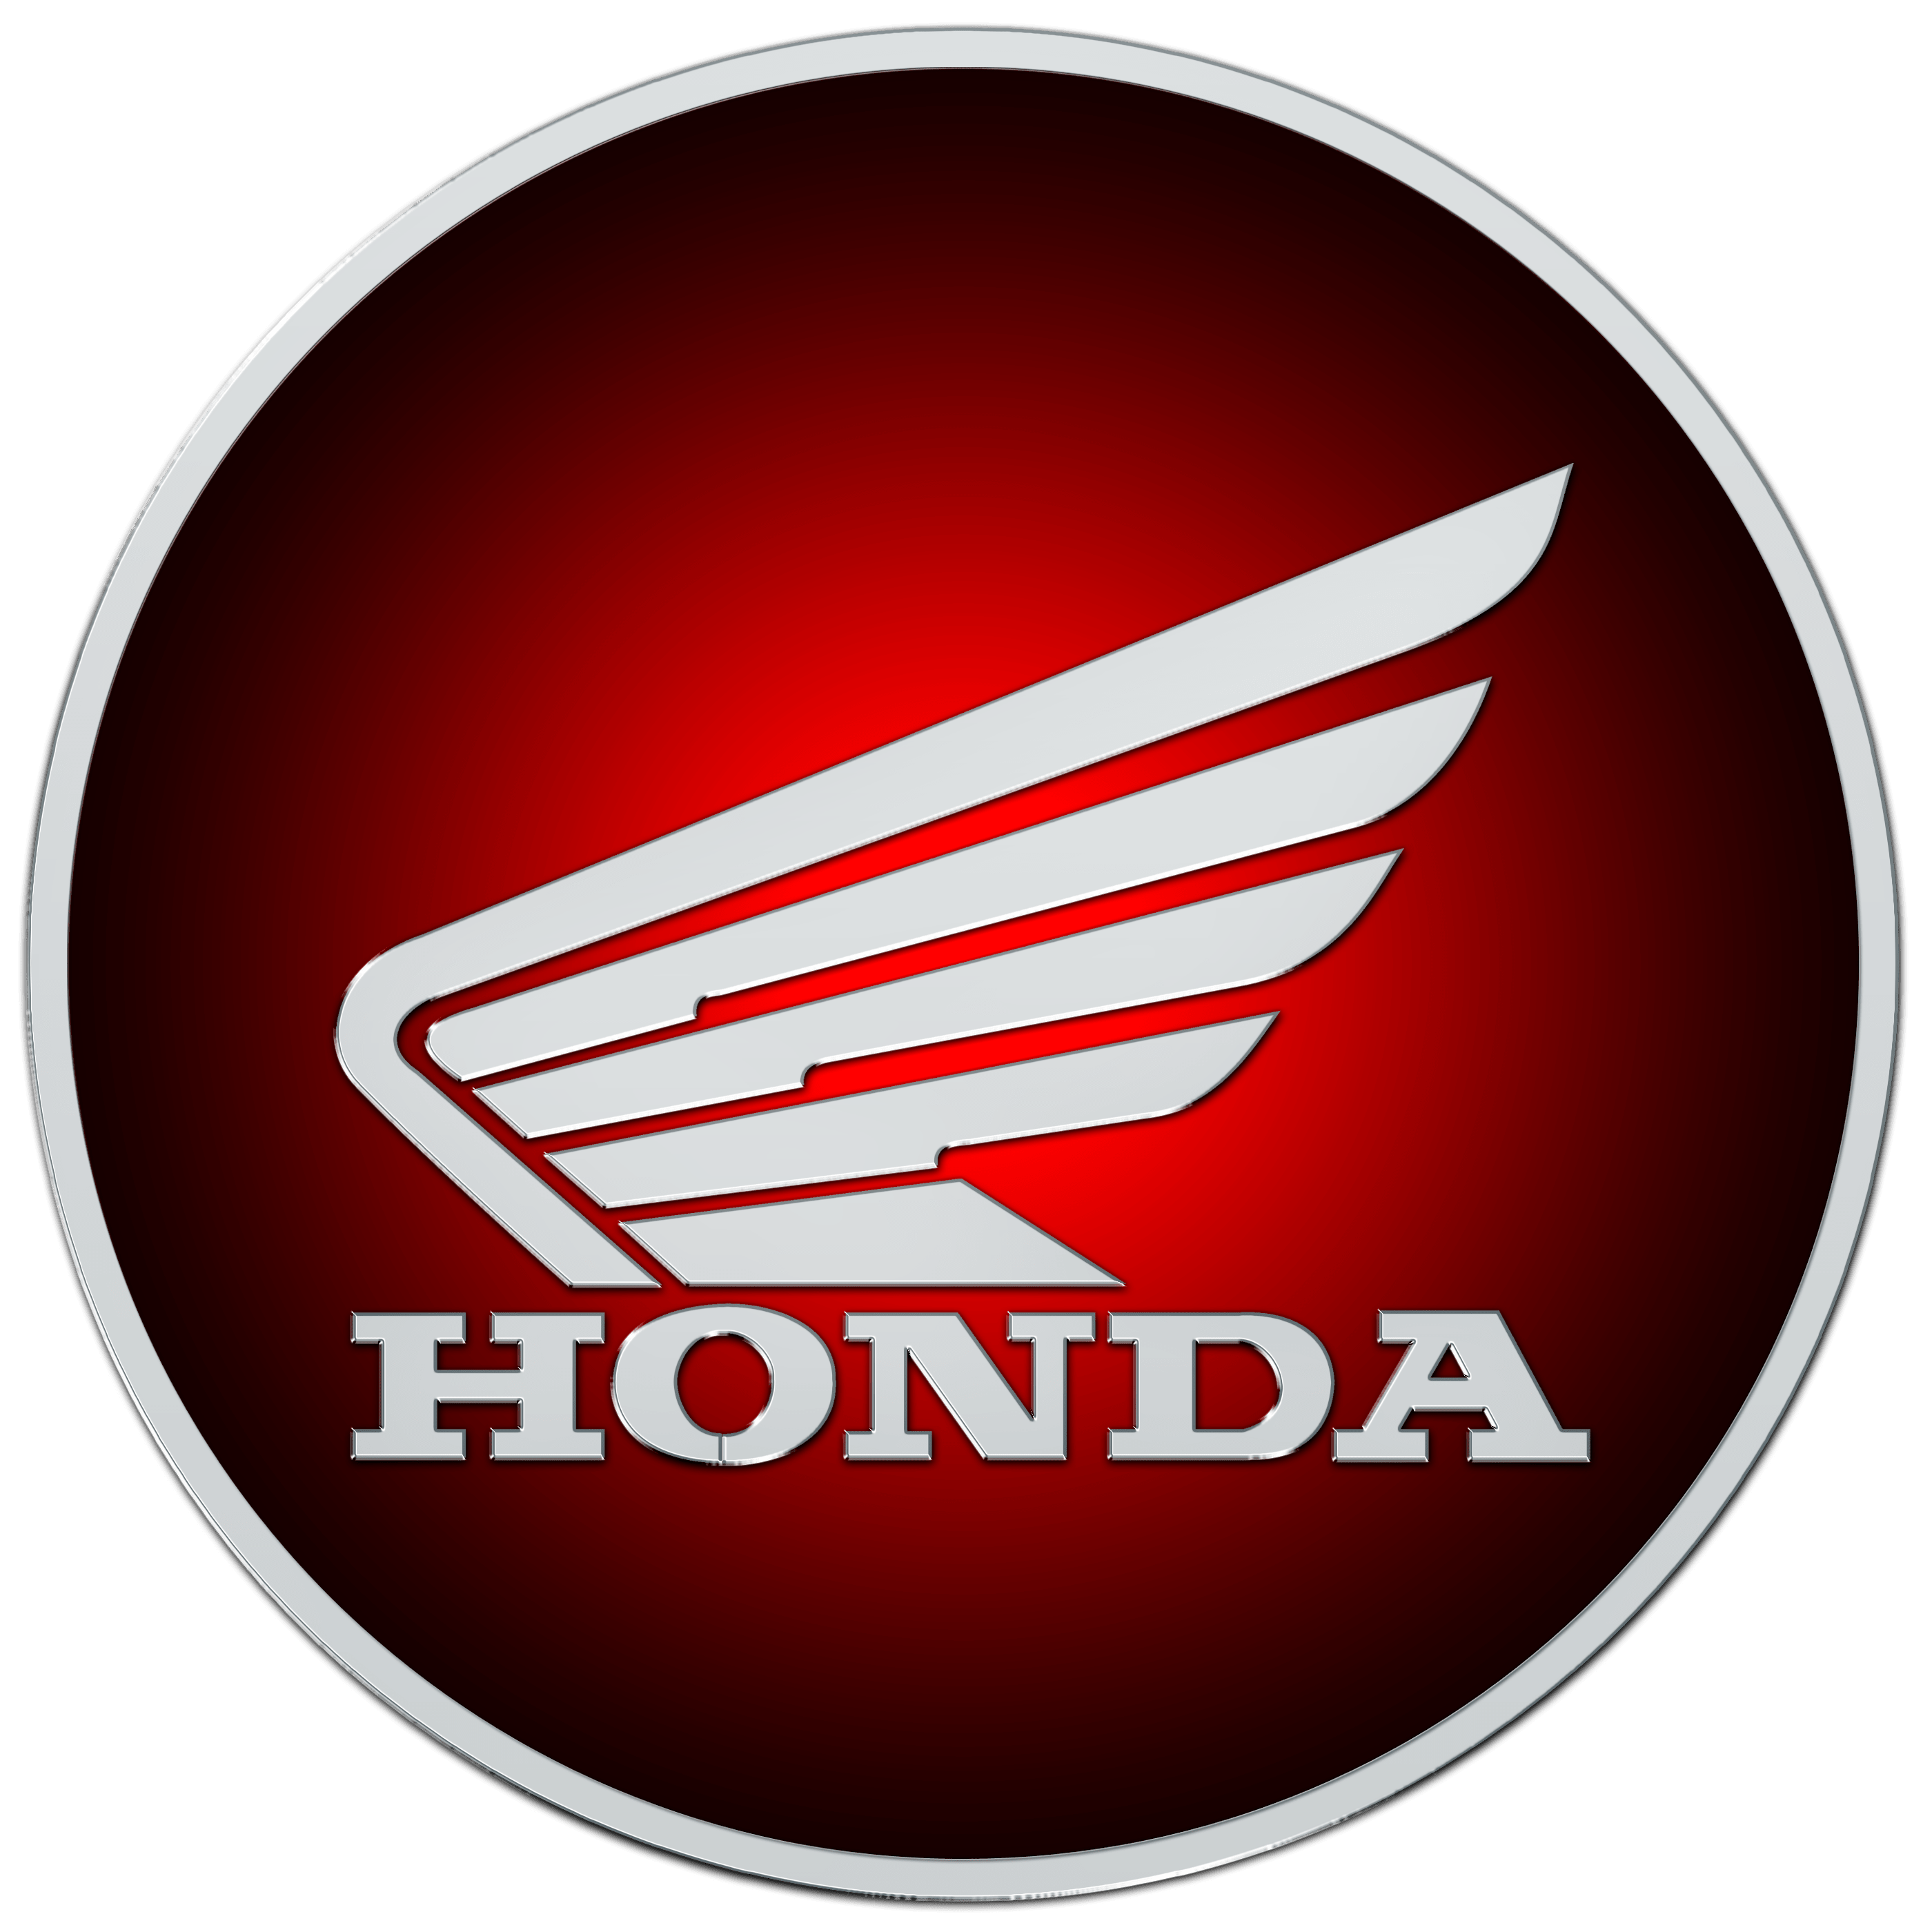 Old Honda Motorcycle Logo - LogoDix